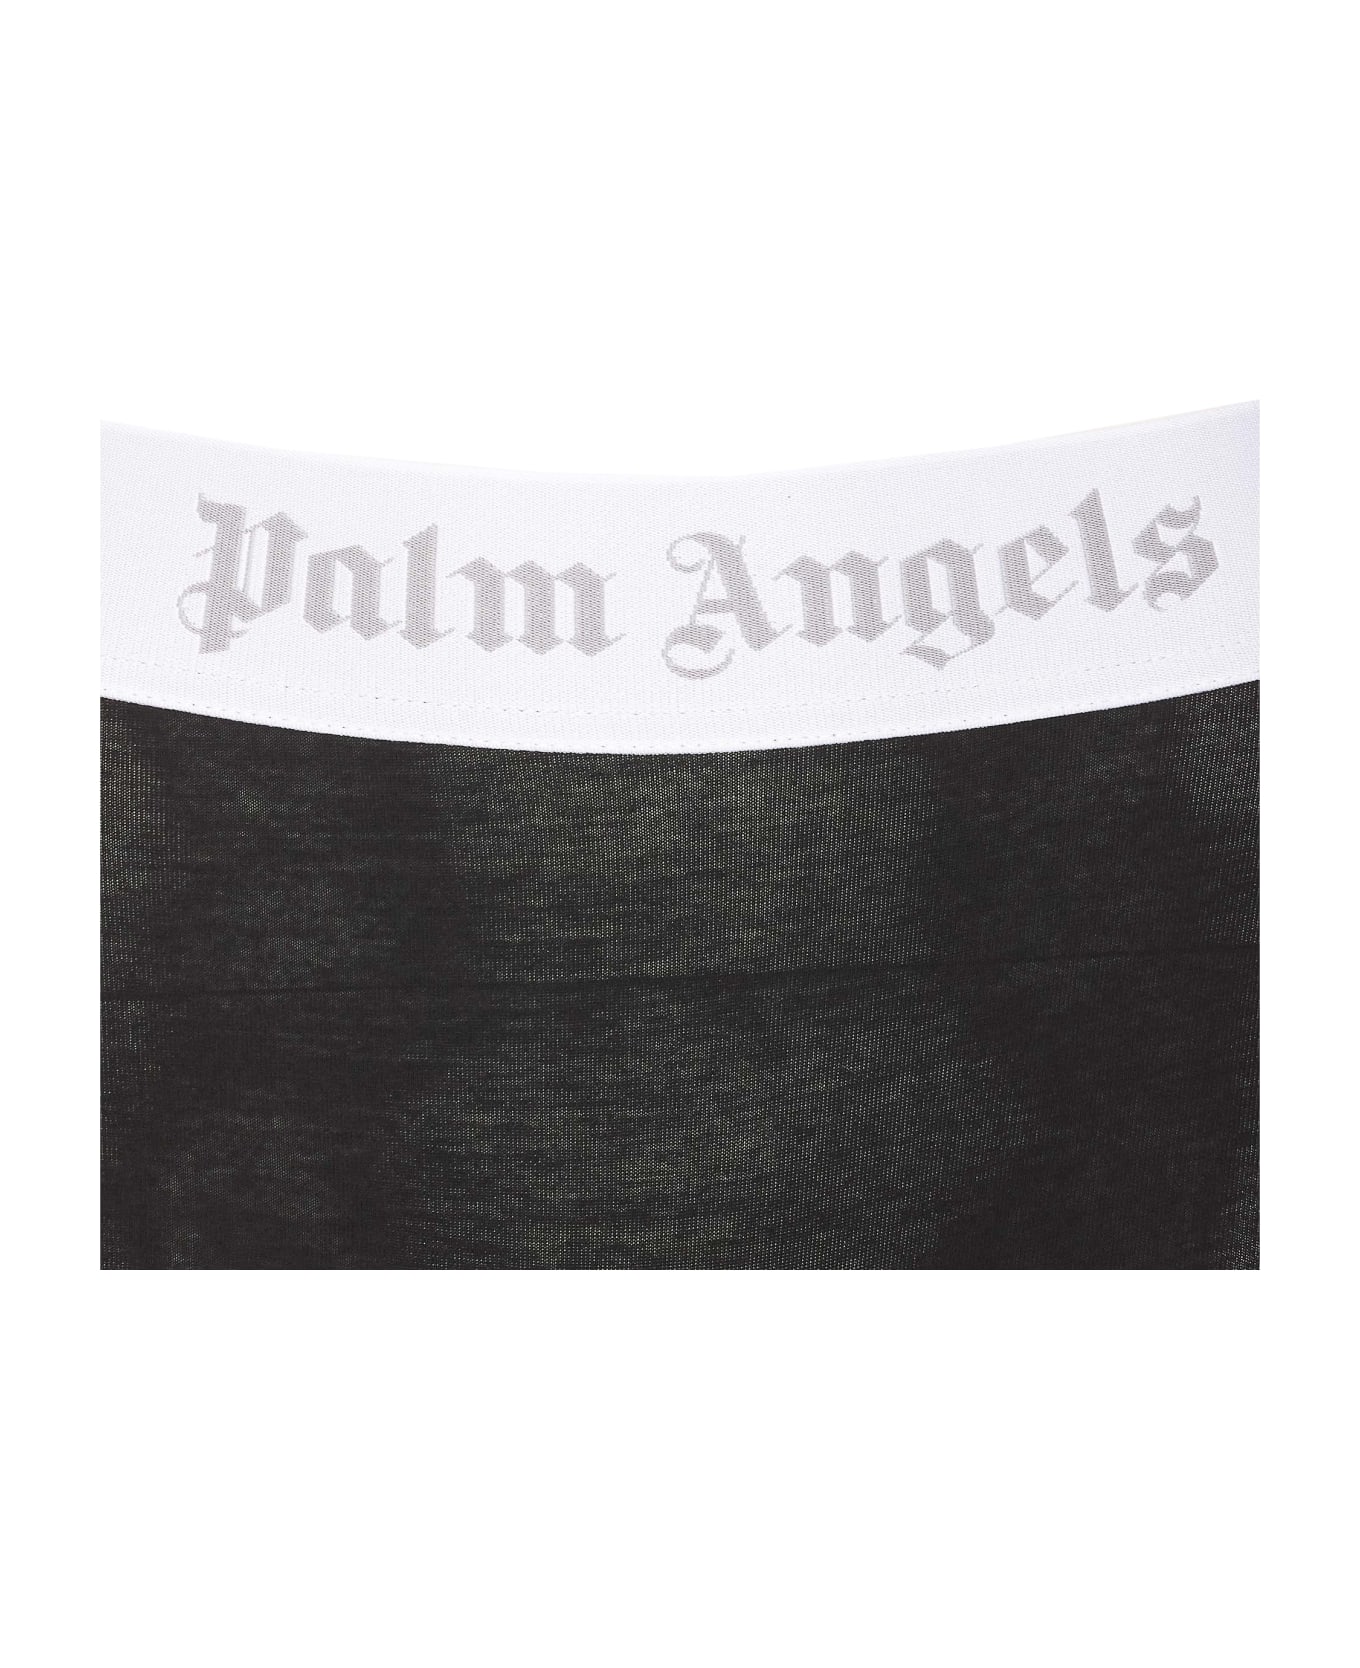 Palm Angels Classic Logo High Brazil Slip - BLACK